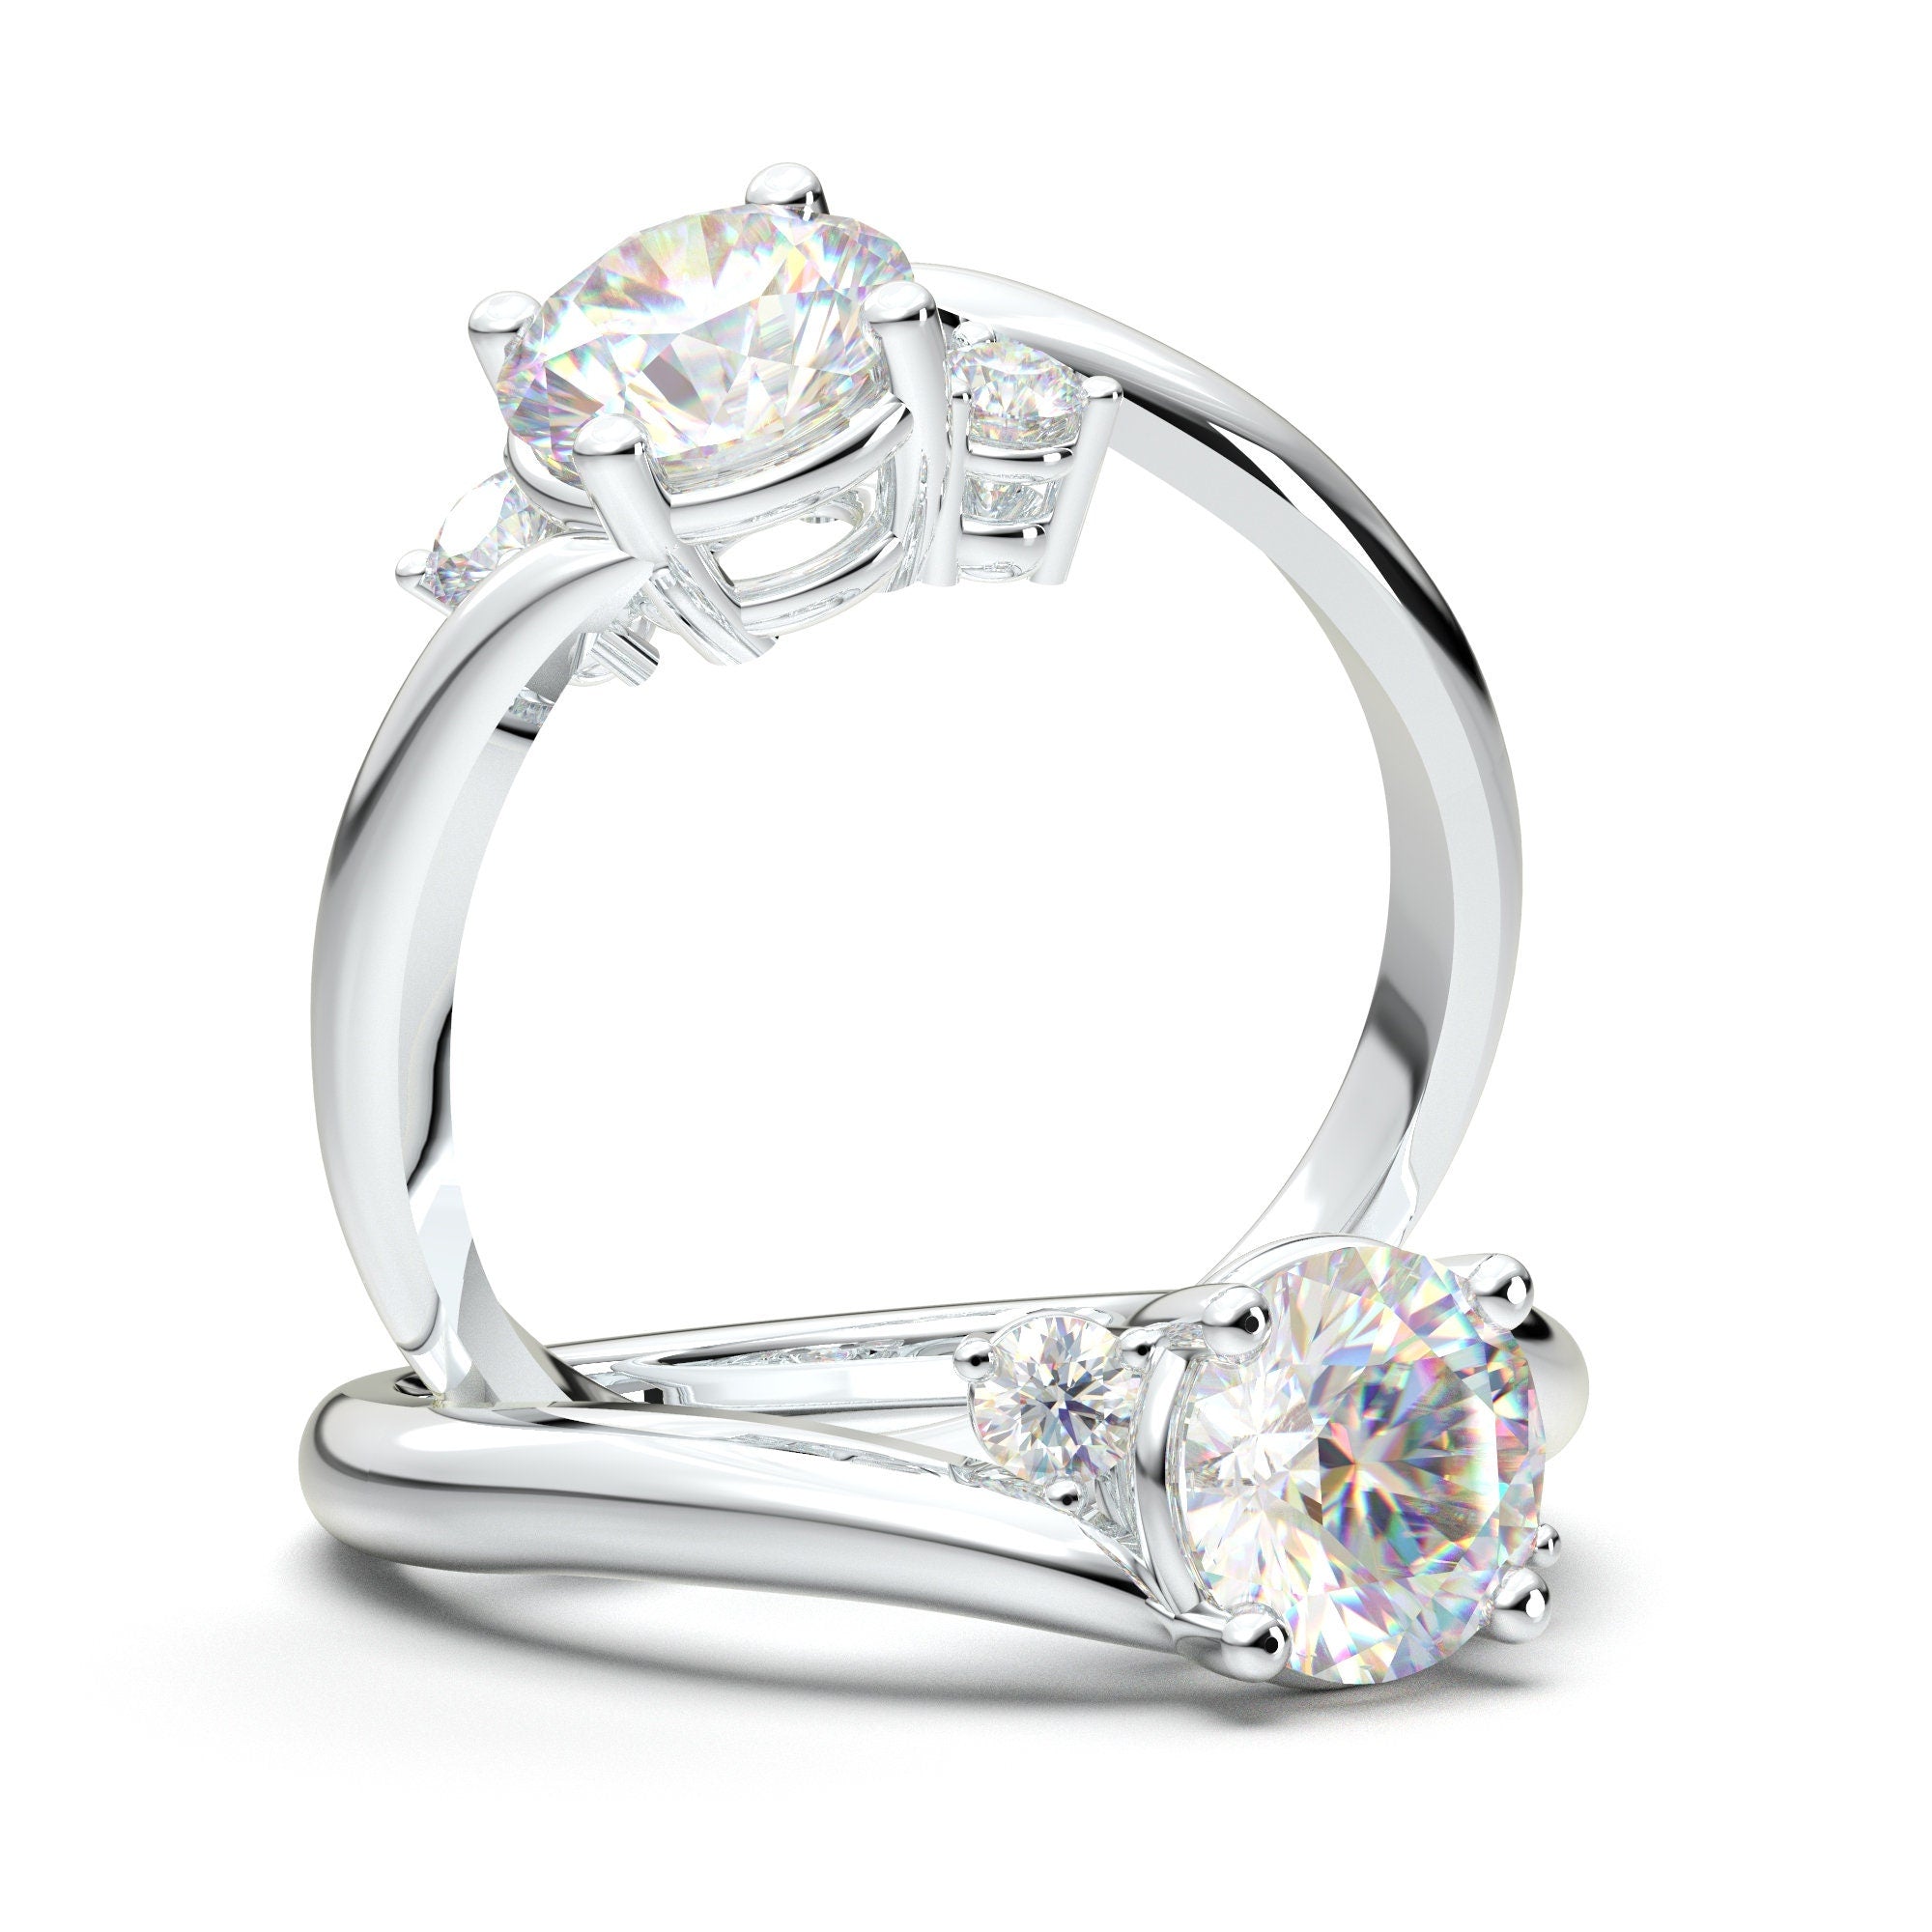 Filigree Round Cut Single Stone Engagement Ring In 18K Yellow Gold |  Fascinating Diamonds